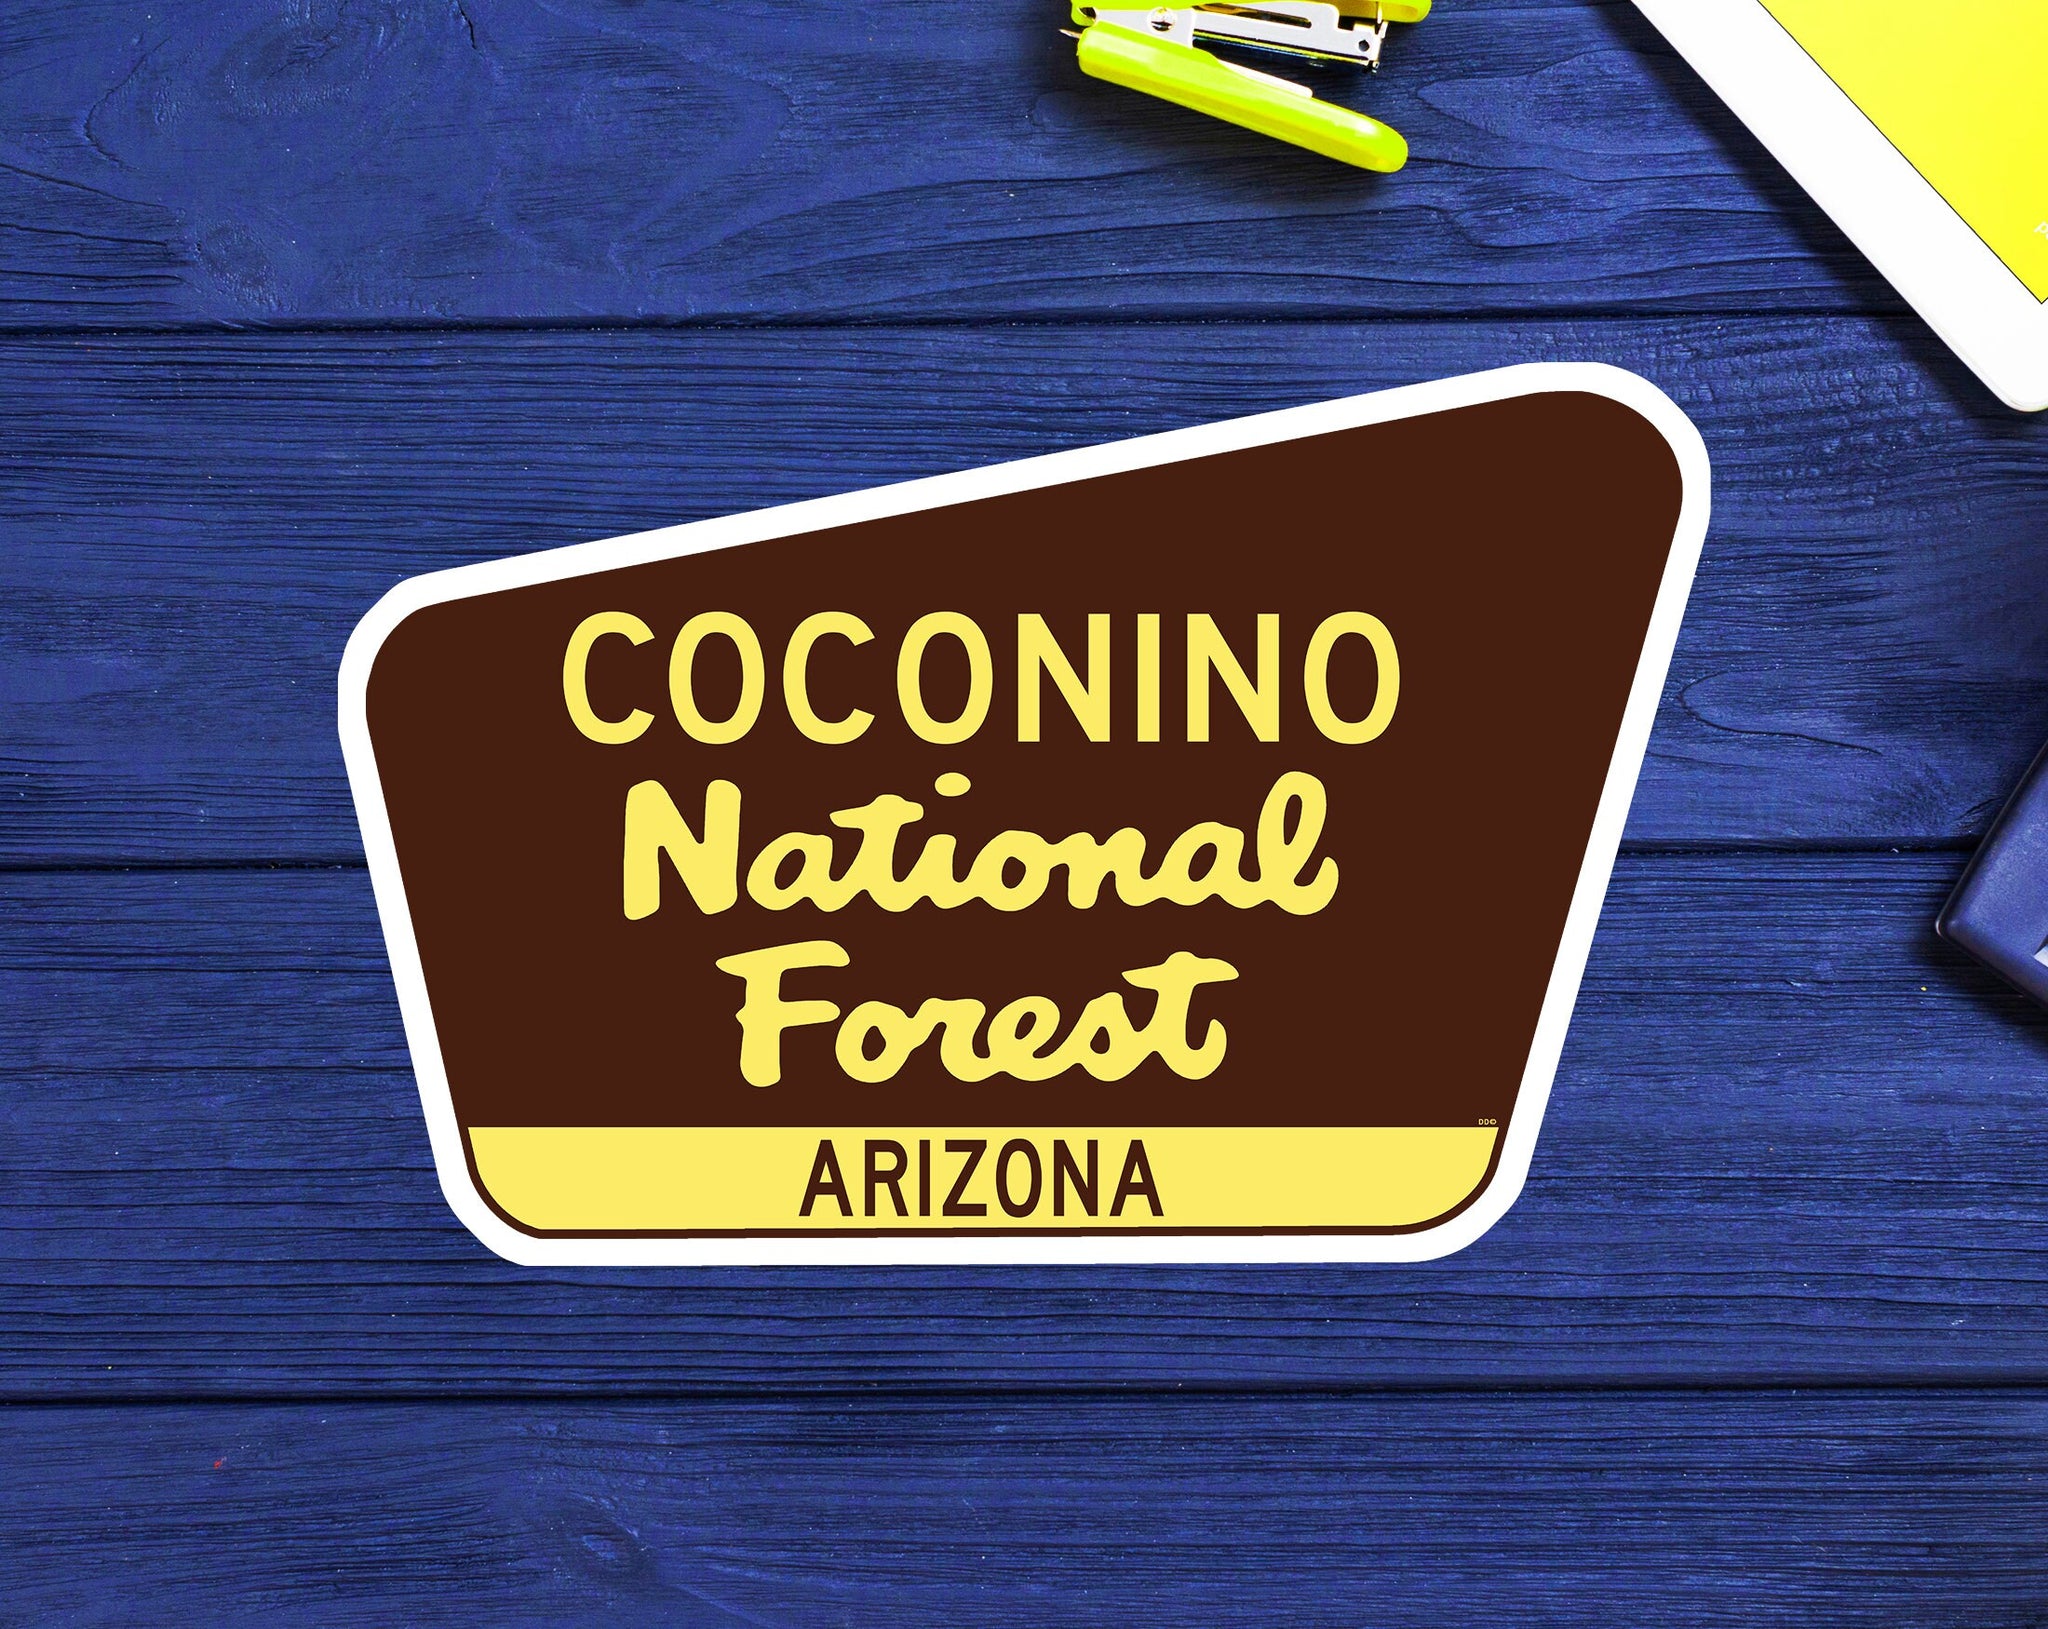 Coconino National Forest Arizona  Sign 3.75" x 2.5" Park Vinyl